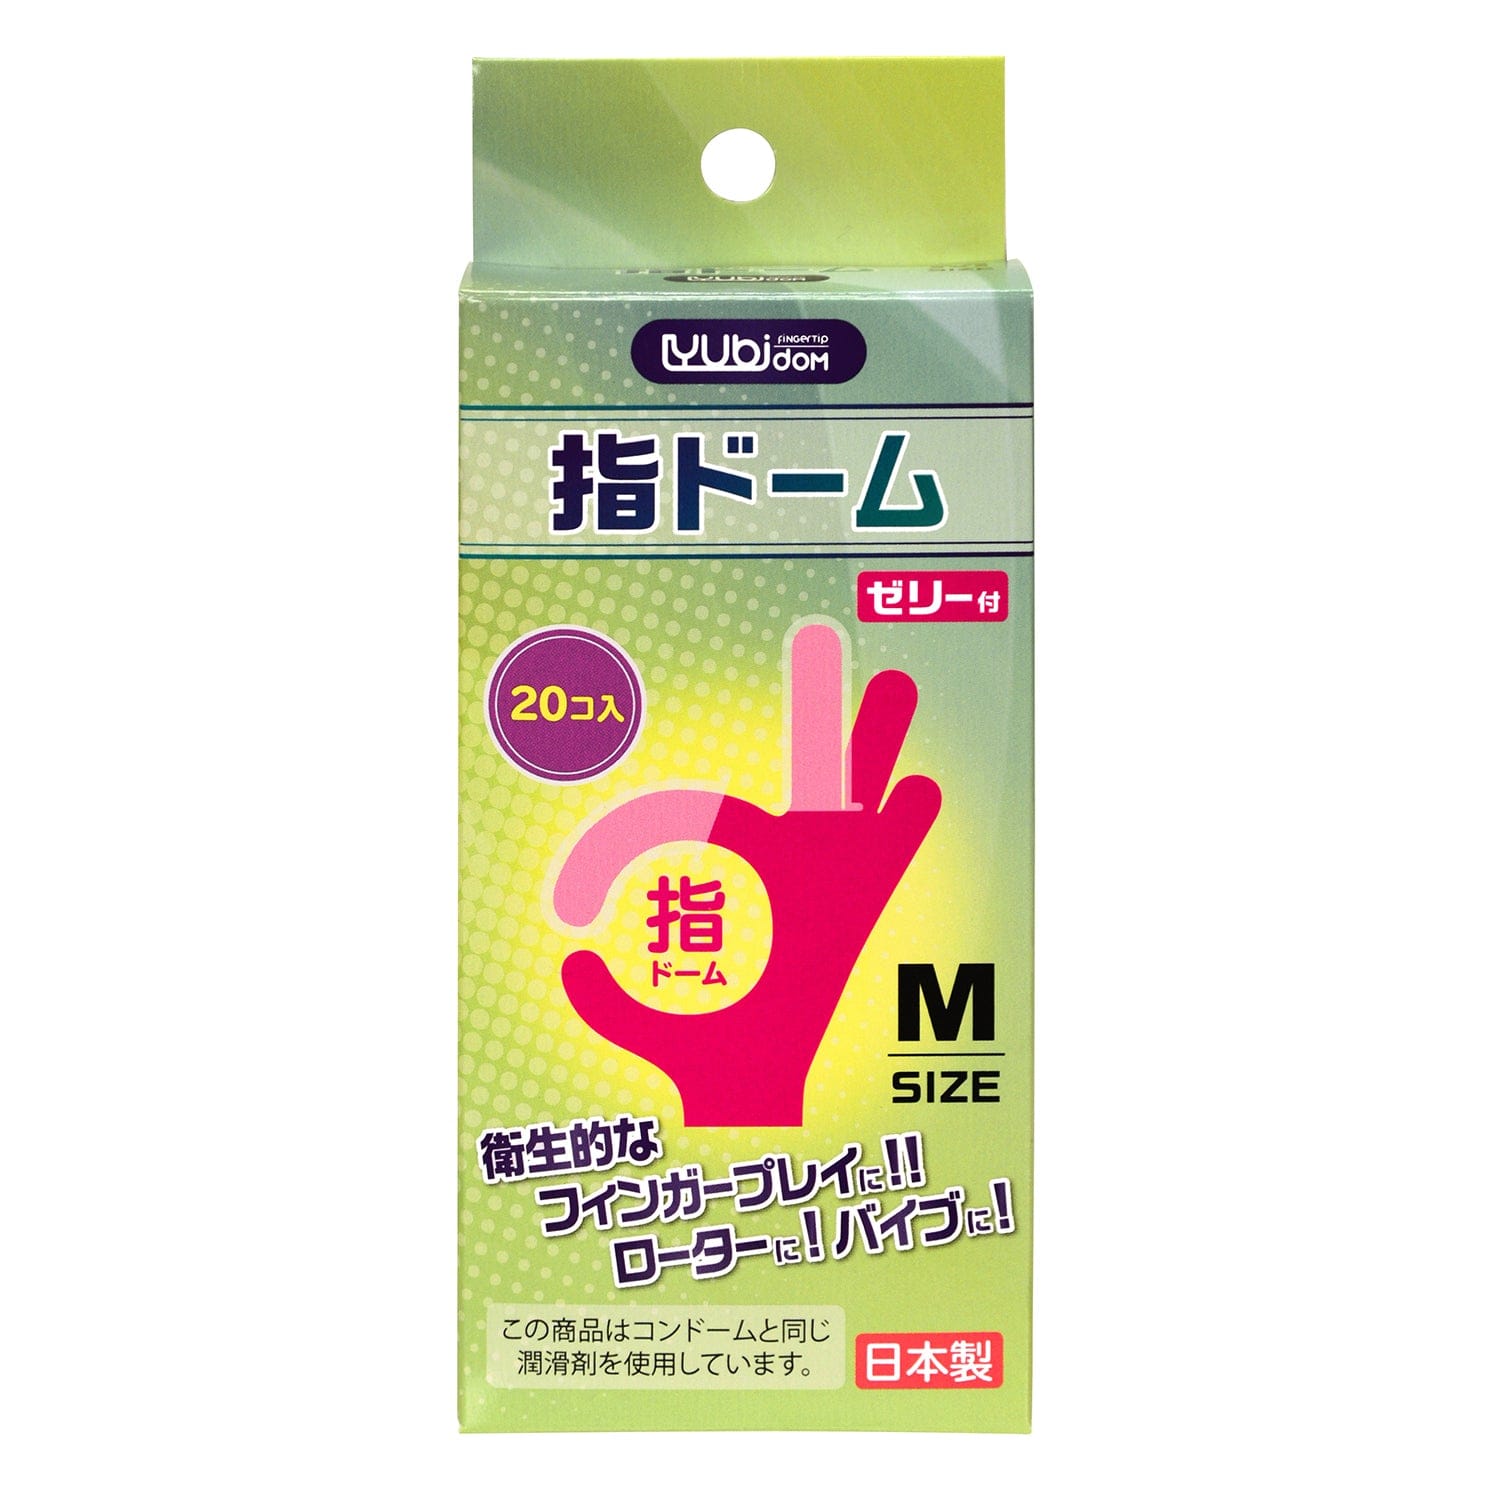 SSI Japan - Finger Sack Dome 20 pieces M (Clear) Novelties (Non Vibration) 4589949760016 CherryAffairs